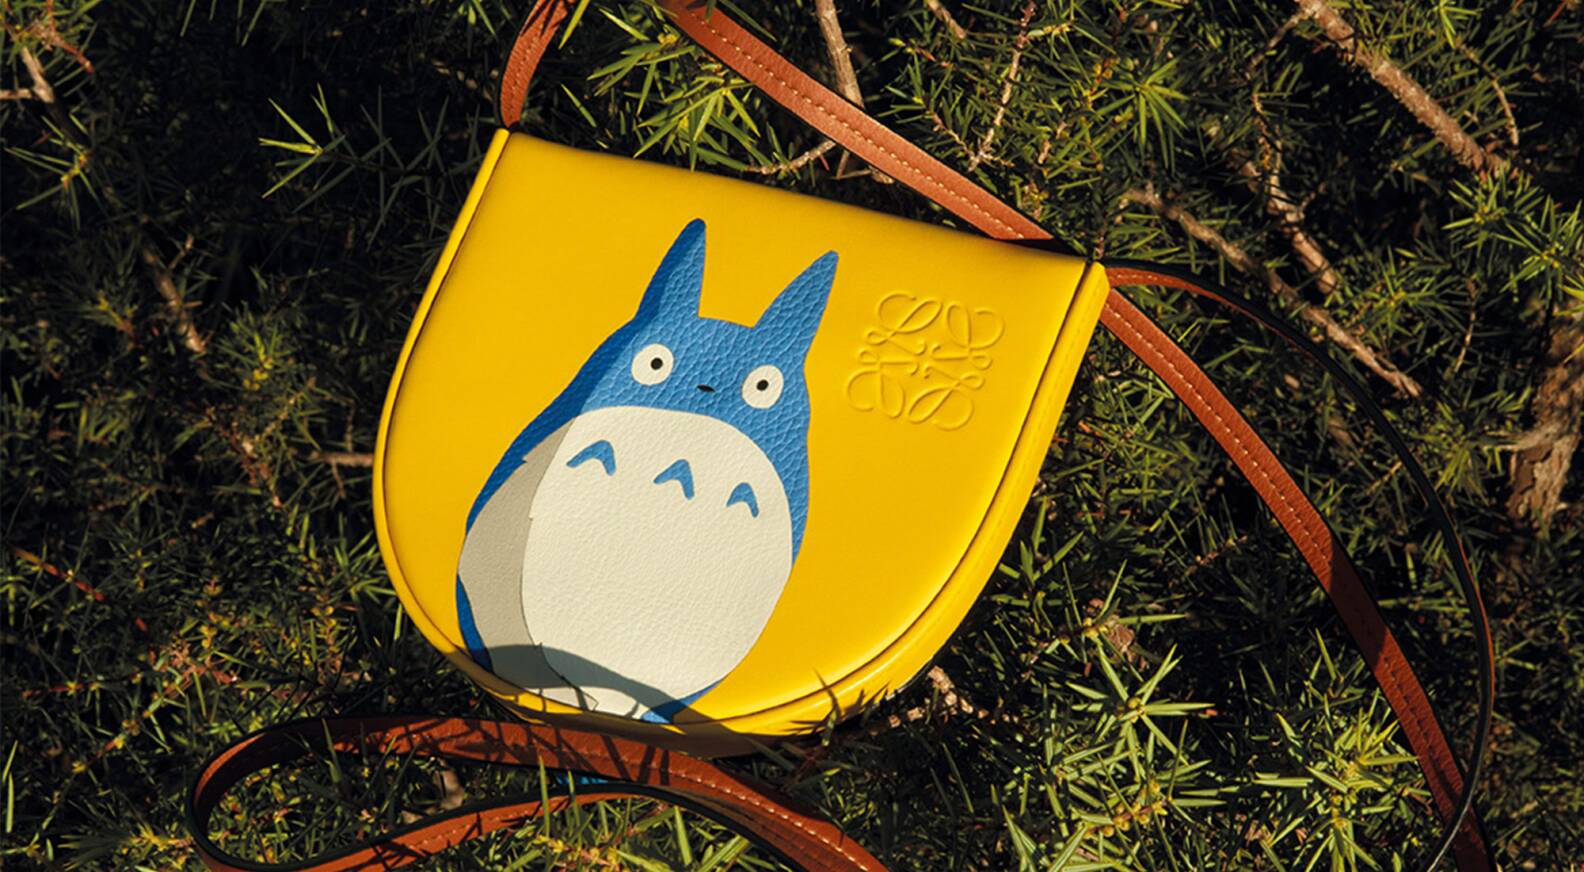 Loewe x My Neighbor Totoro - Sold out everywhere! Gate Pocket